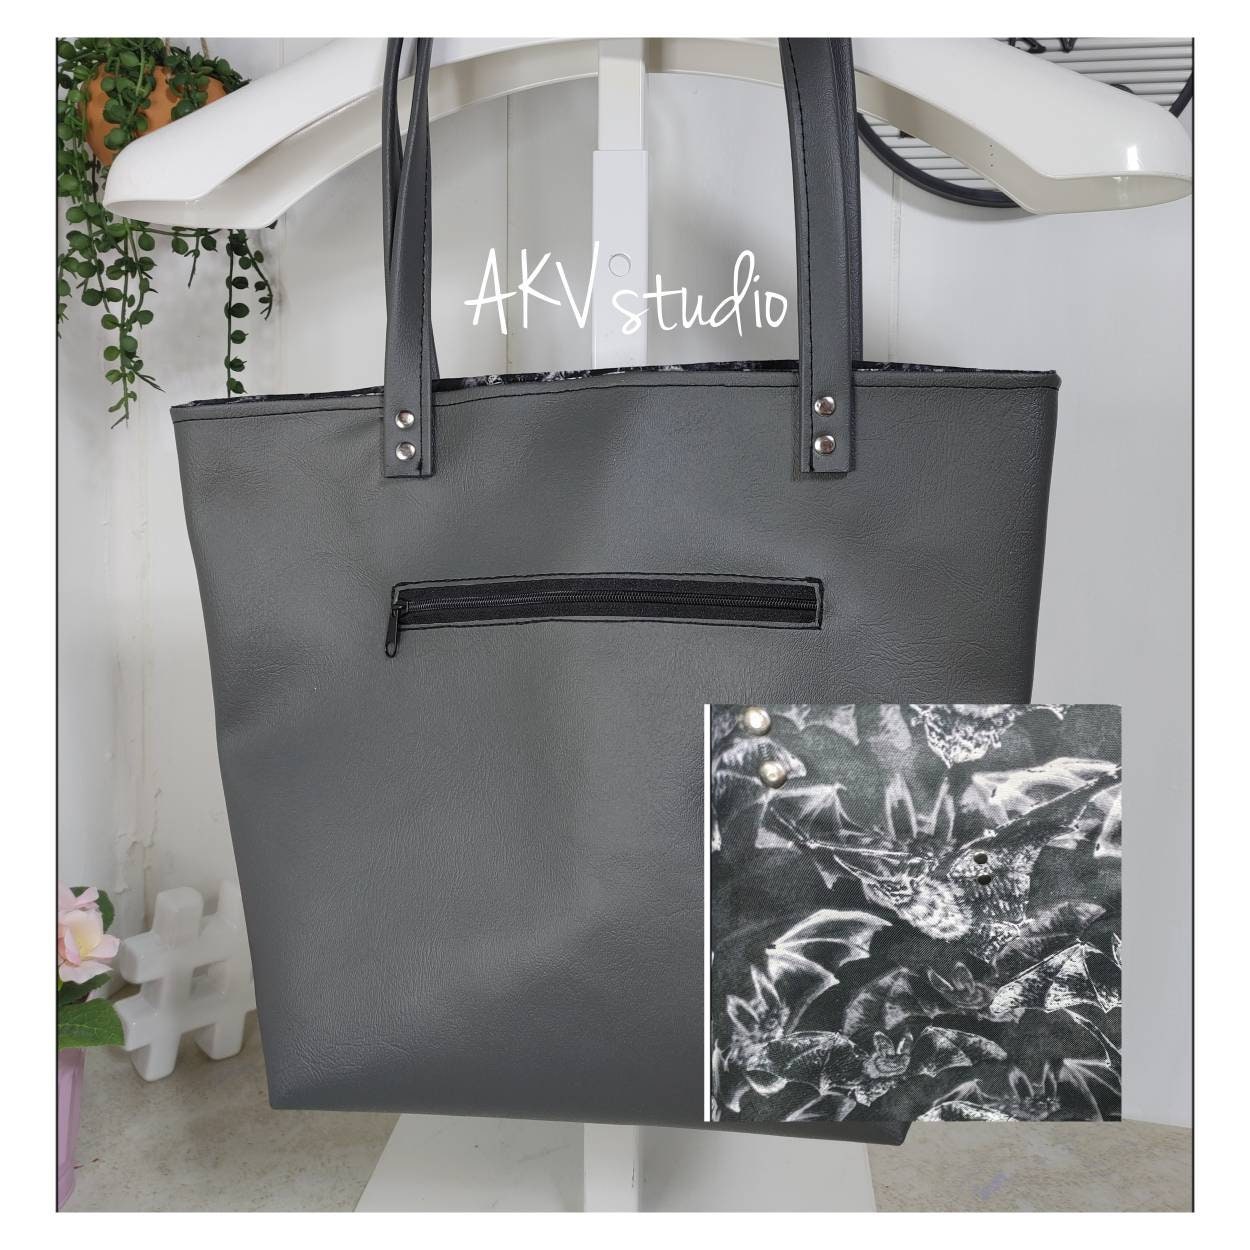 vinyl tote bags with zipper